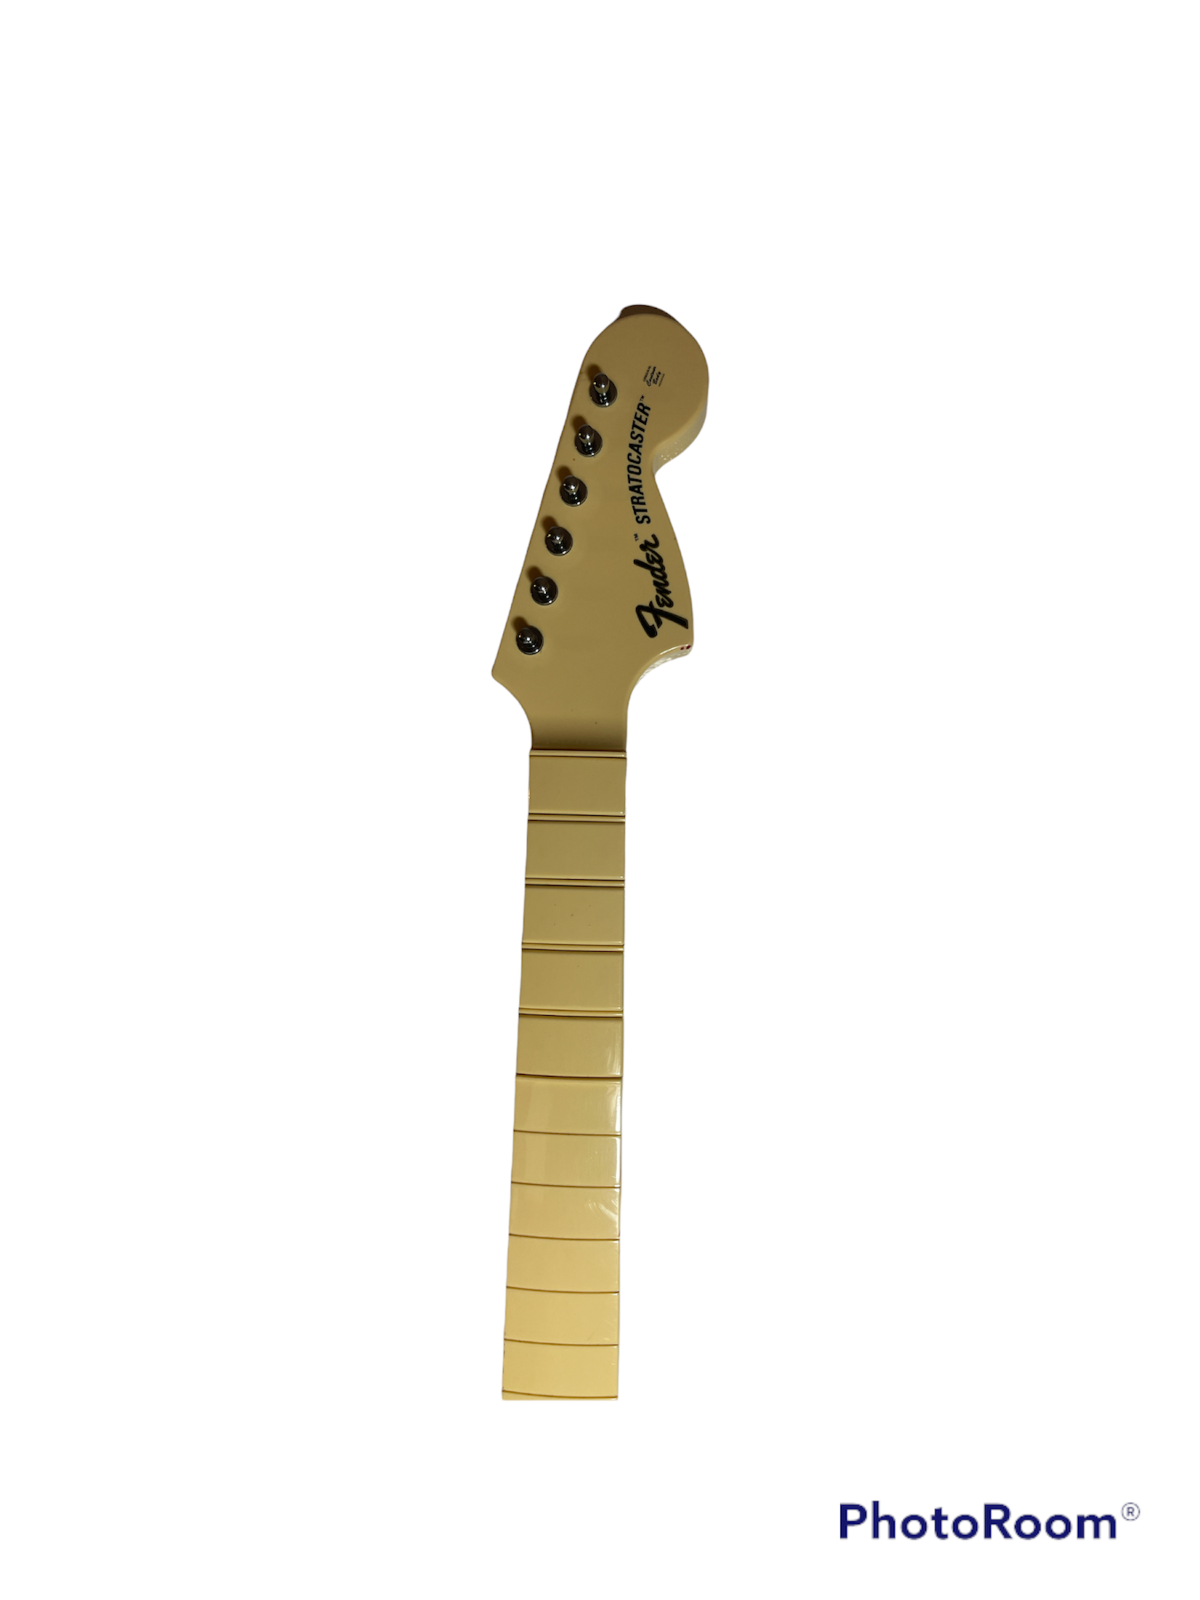 Harmonix Rock Band (822152) Guitar for sale online | eBay